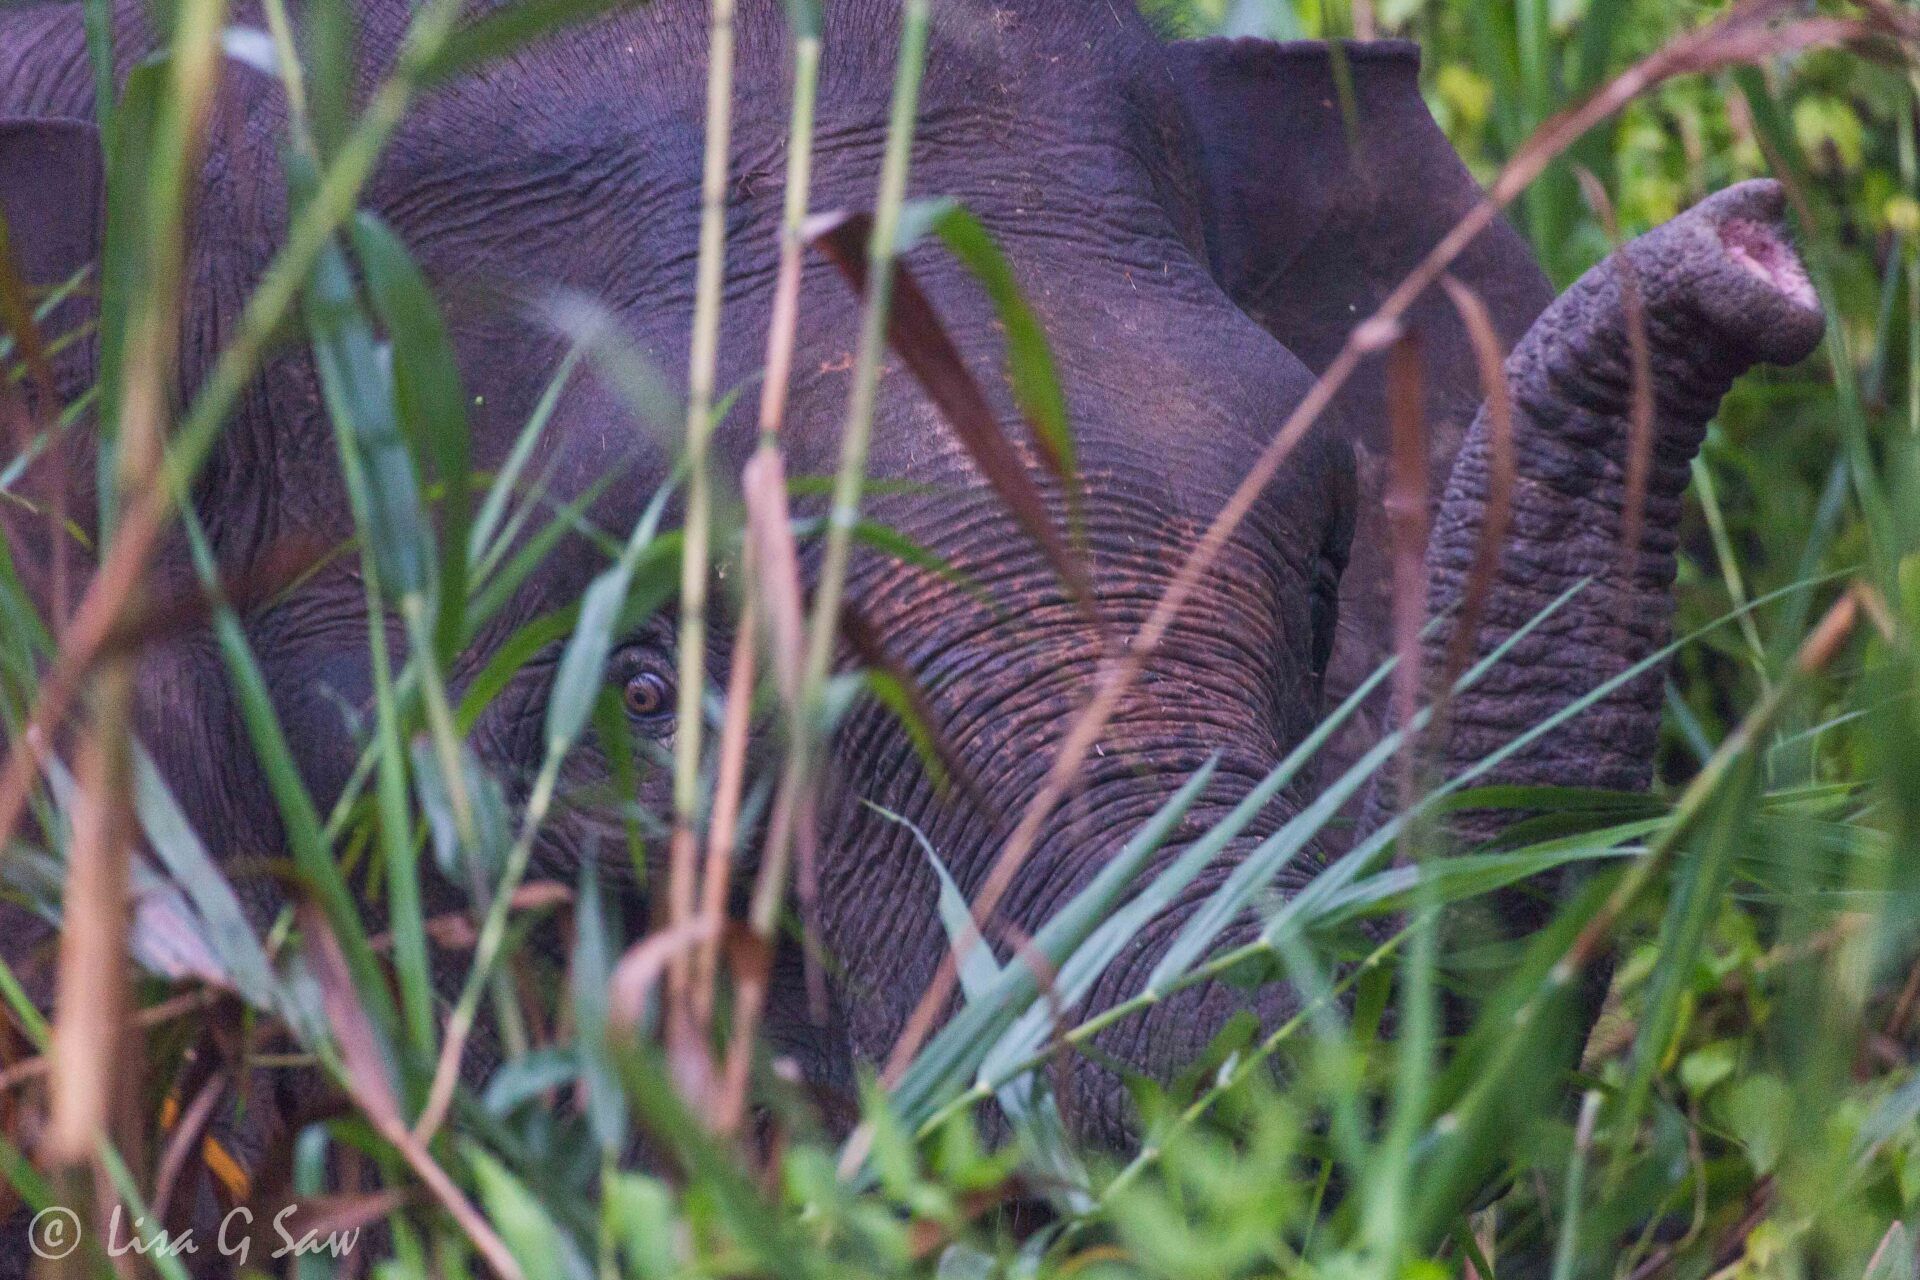 Borneo Pygmy Elephant peering through the grass